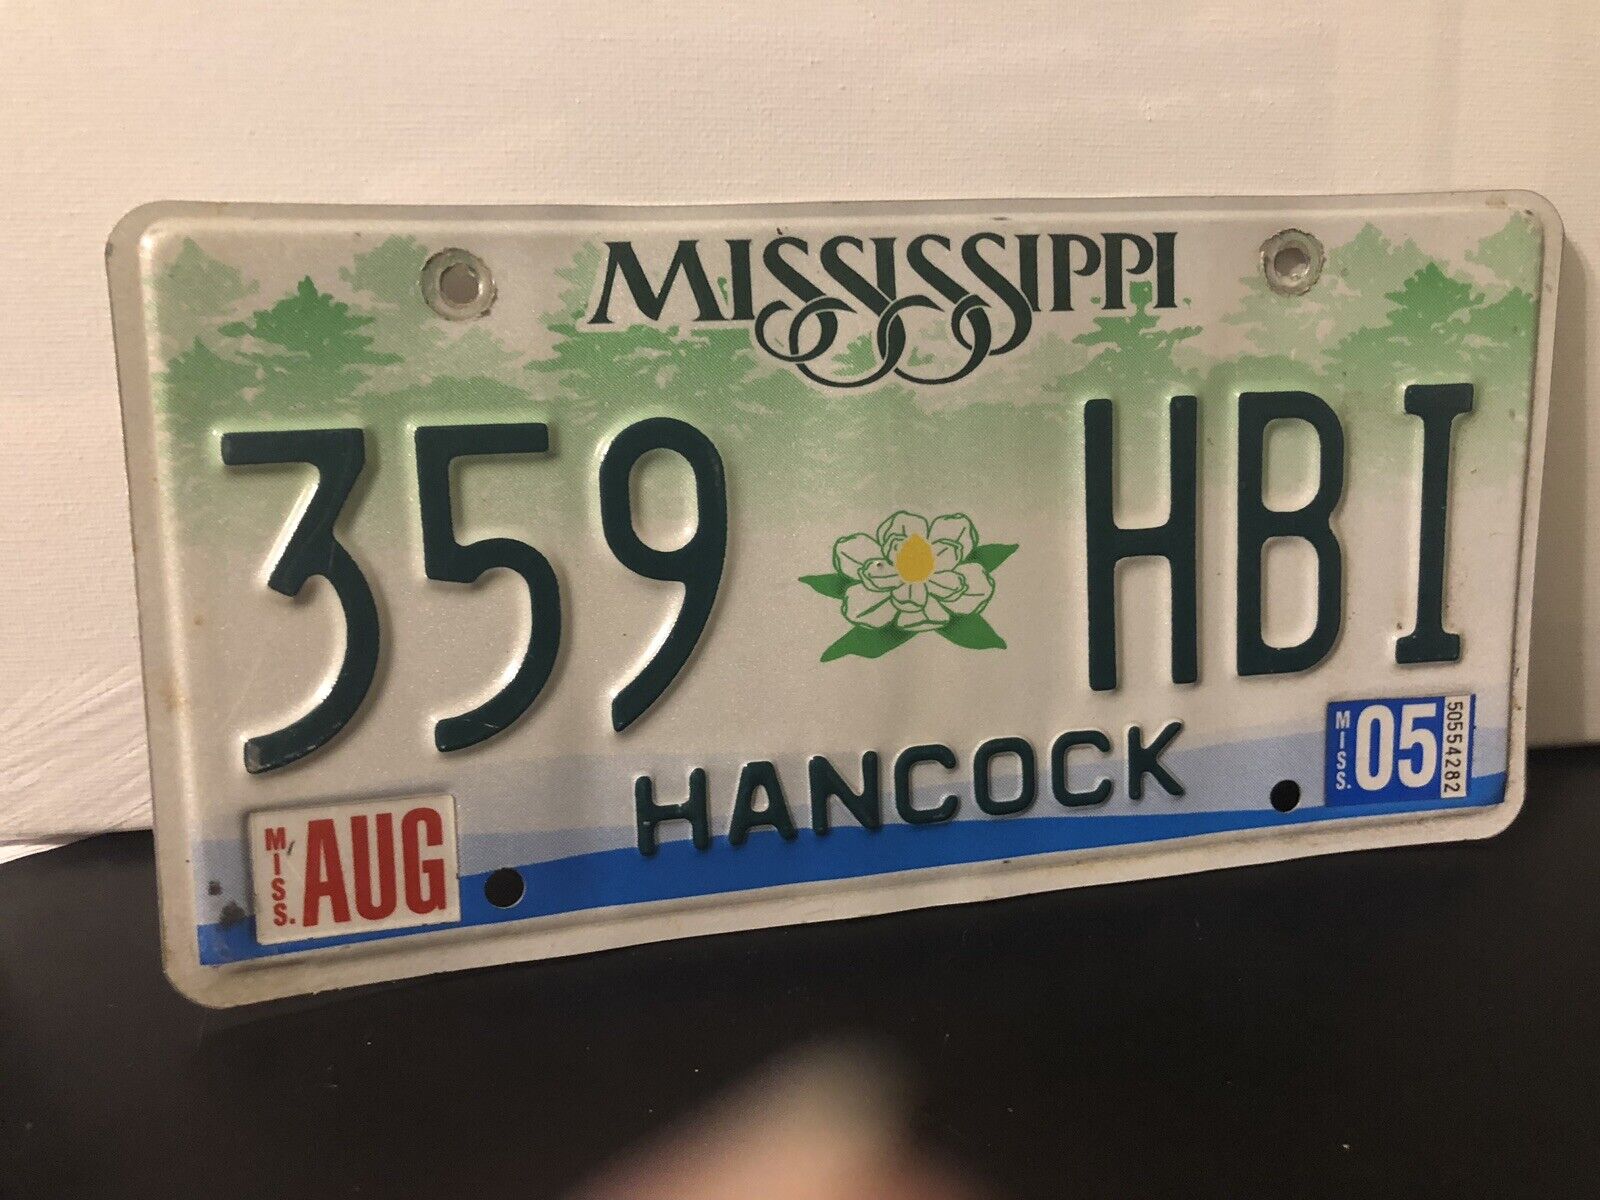 2005 Mississippi License Plate 359 HBI